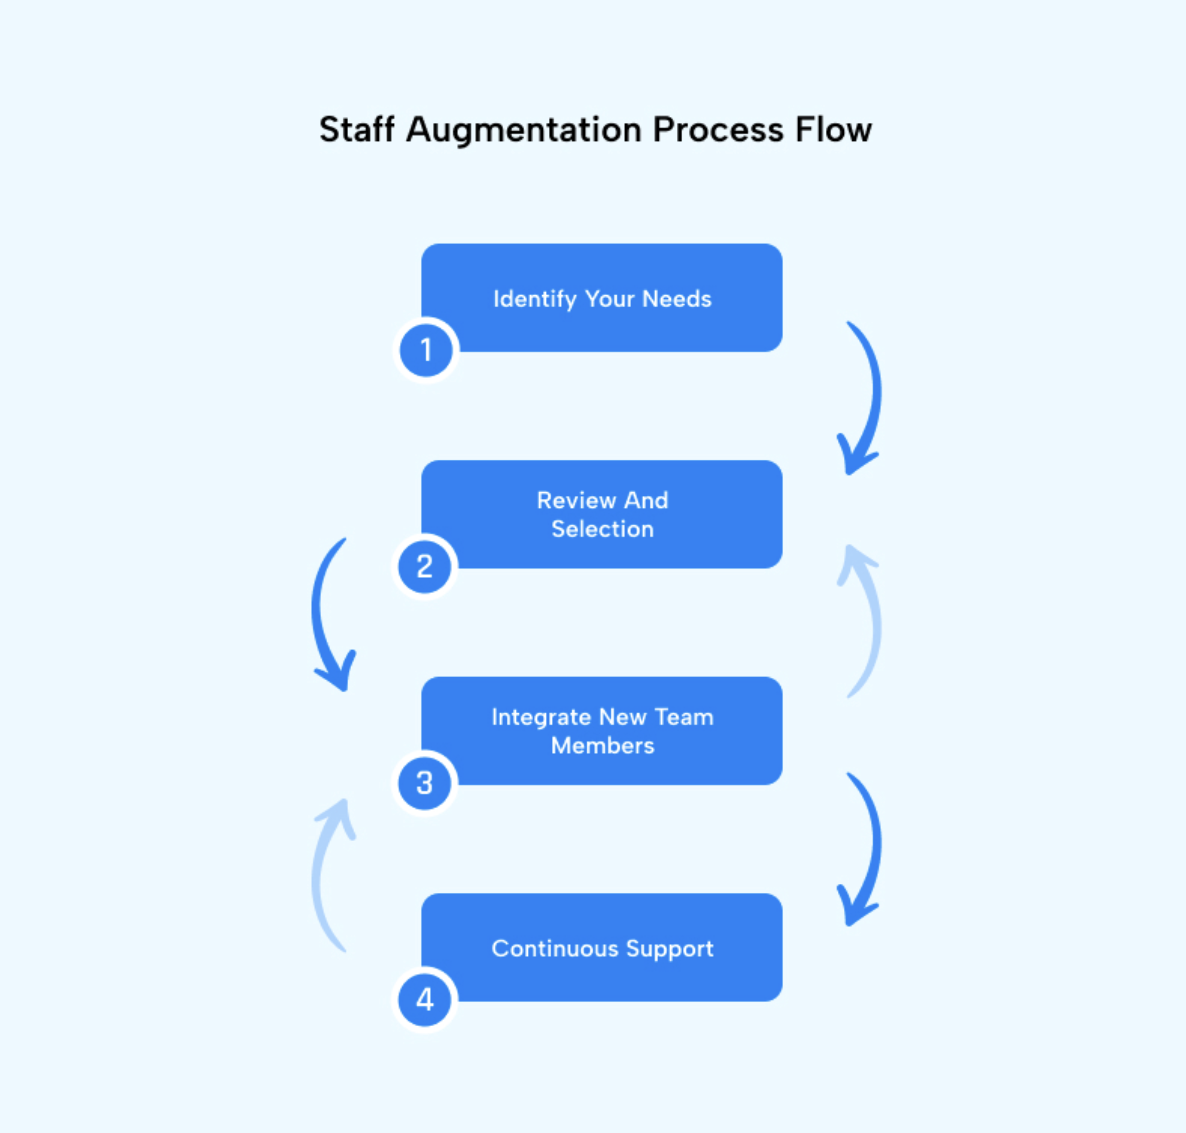 Staff Augmentation Process Flow